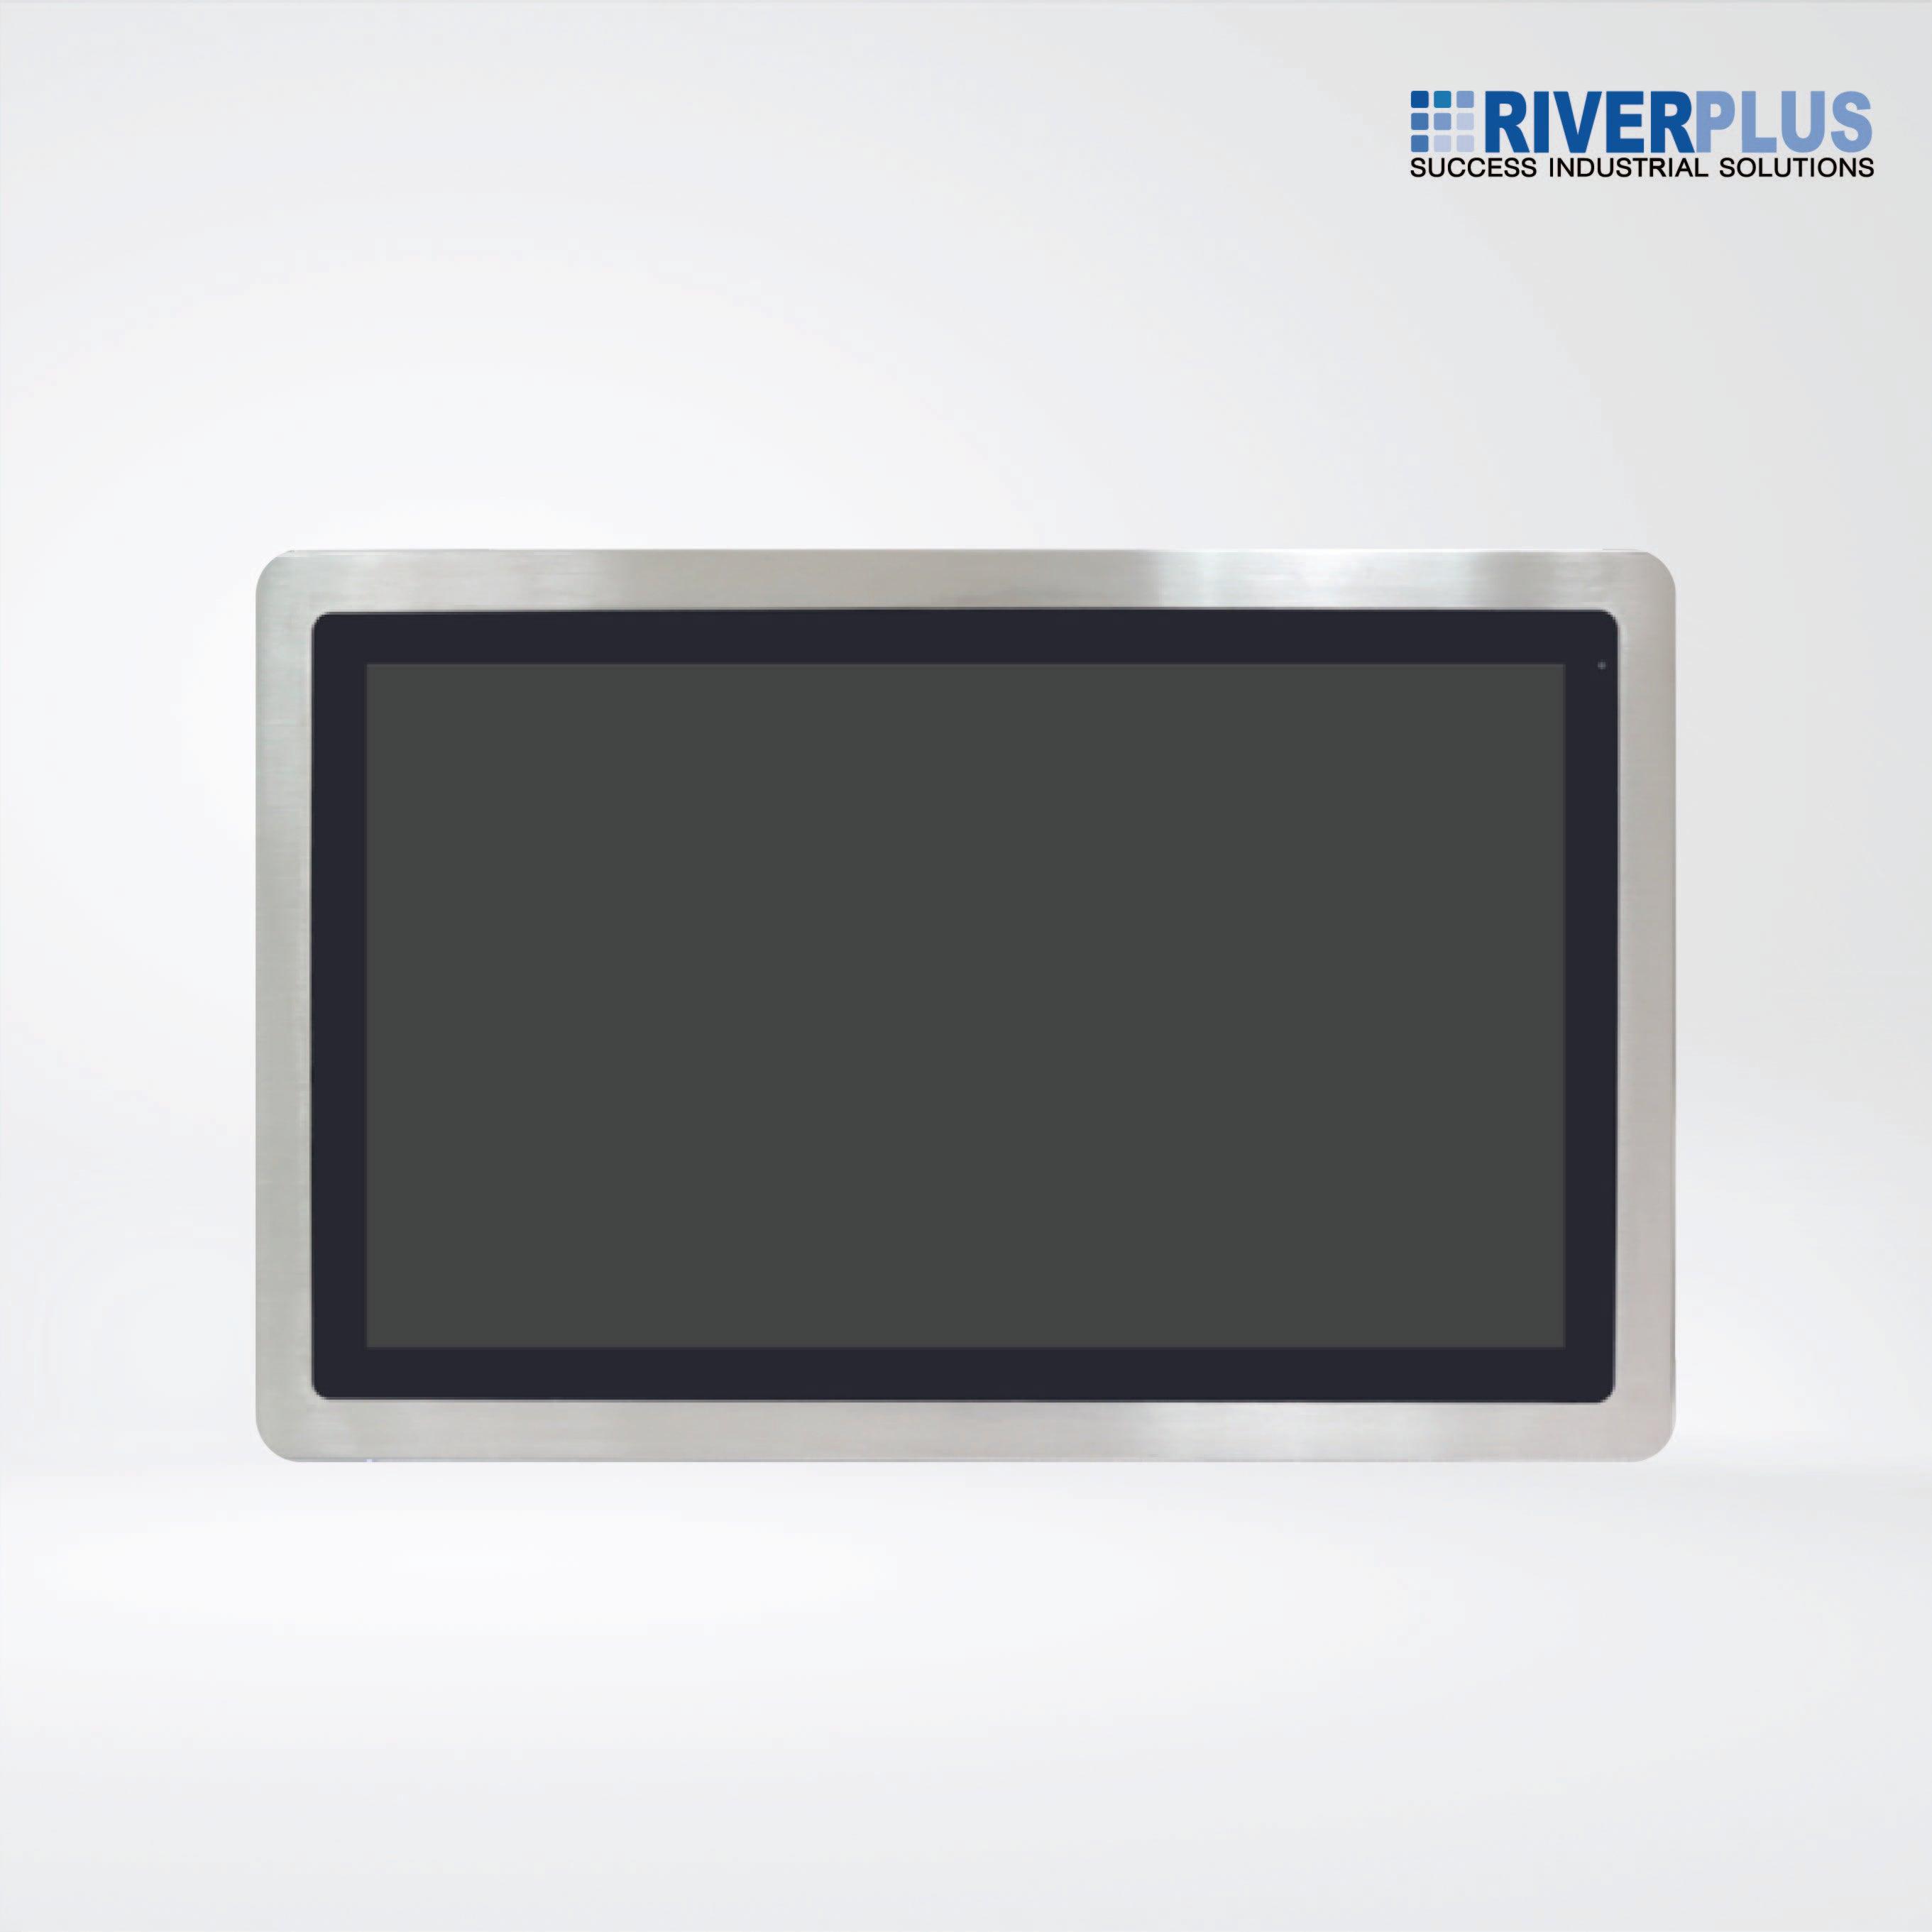 ViTAM-921AG 21.5″ New Gen. IP66/IP69K Stainless Steel Panel PC - Riverplus